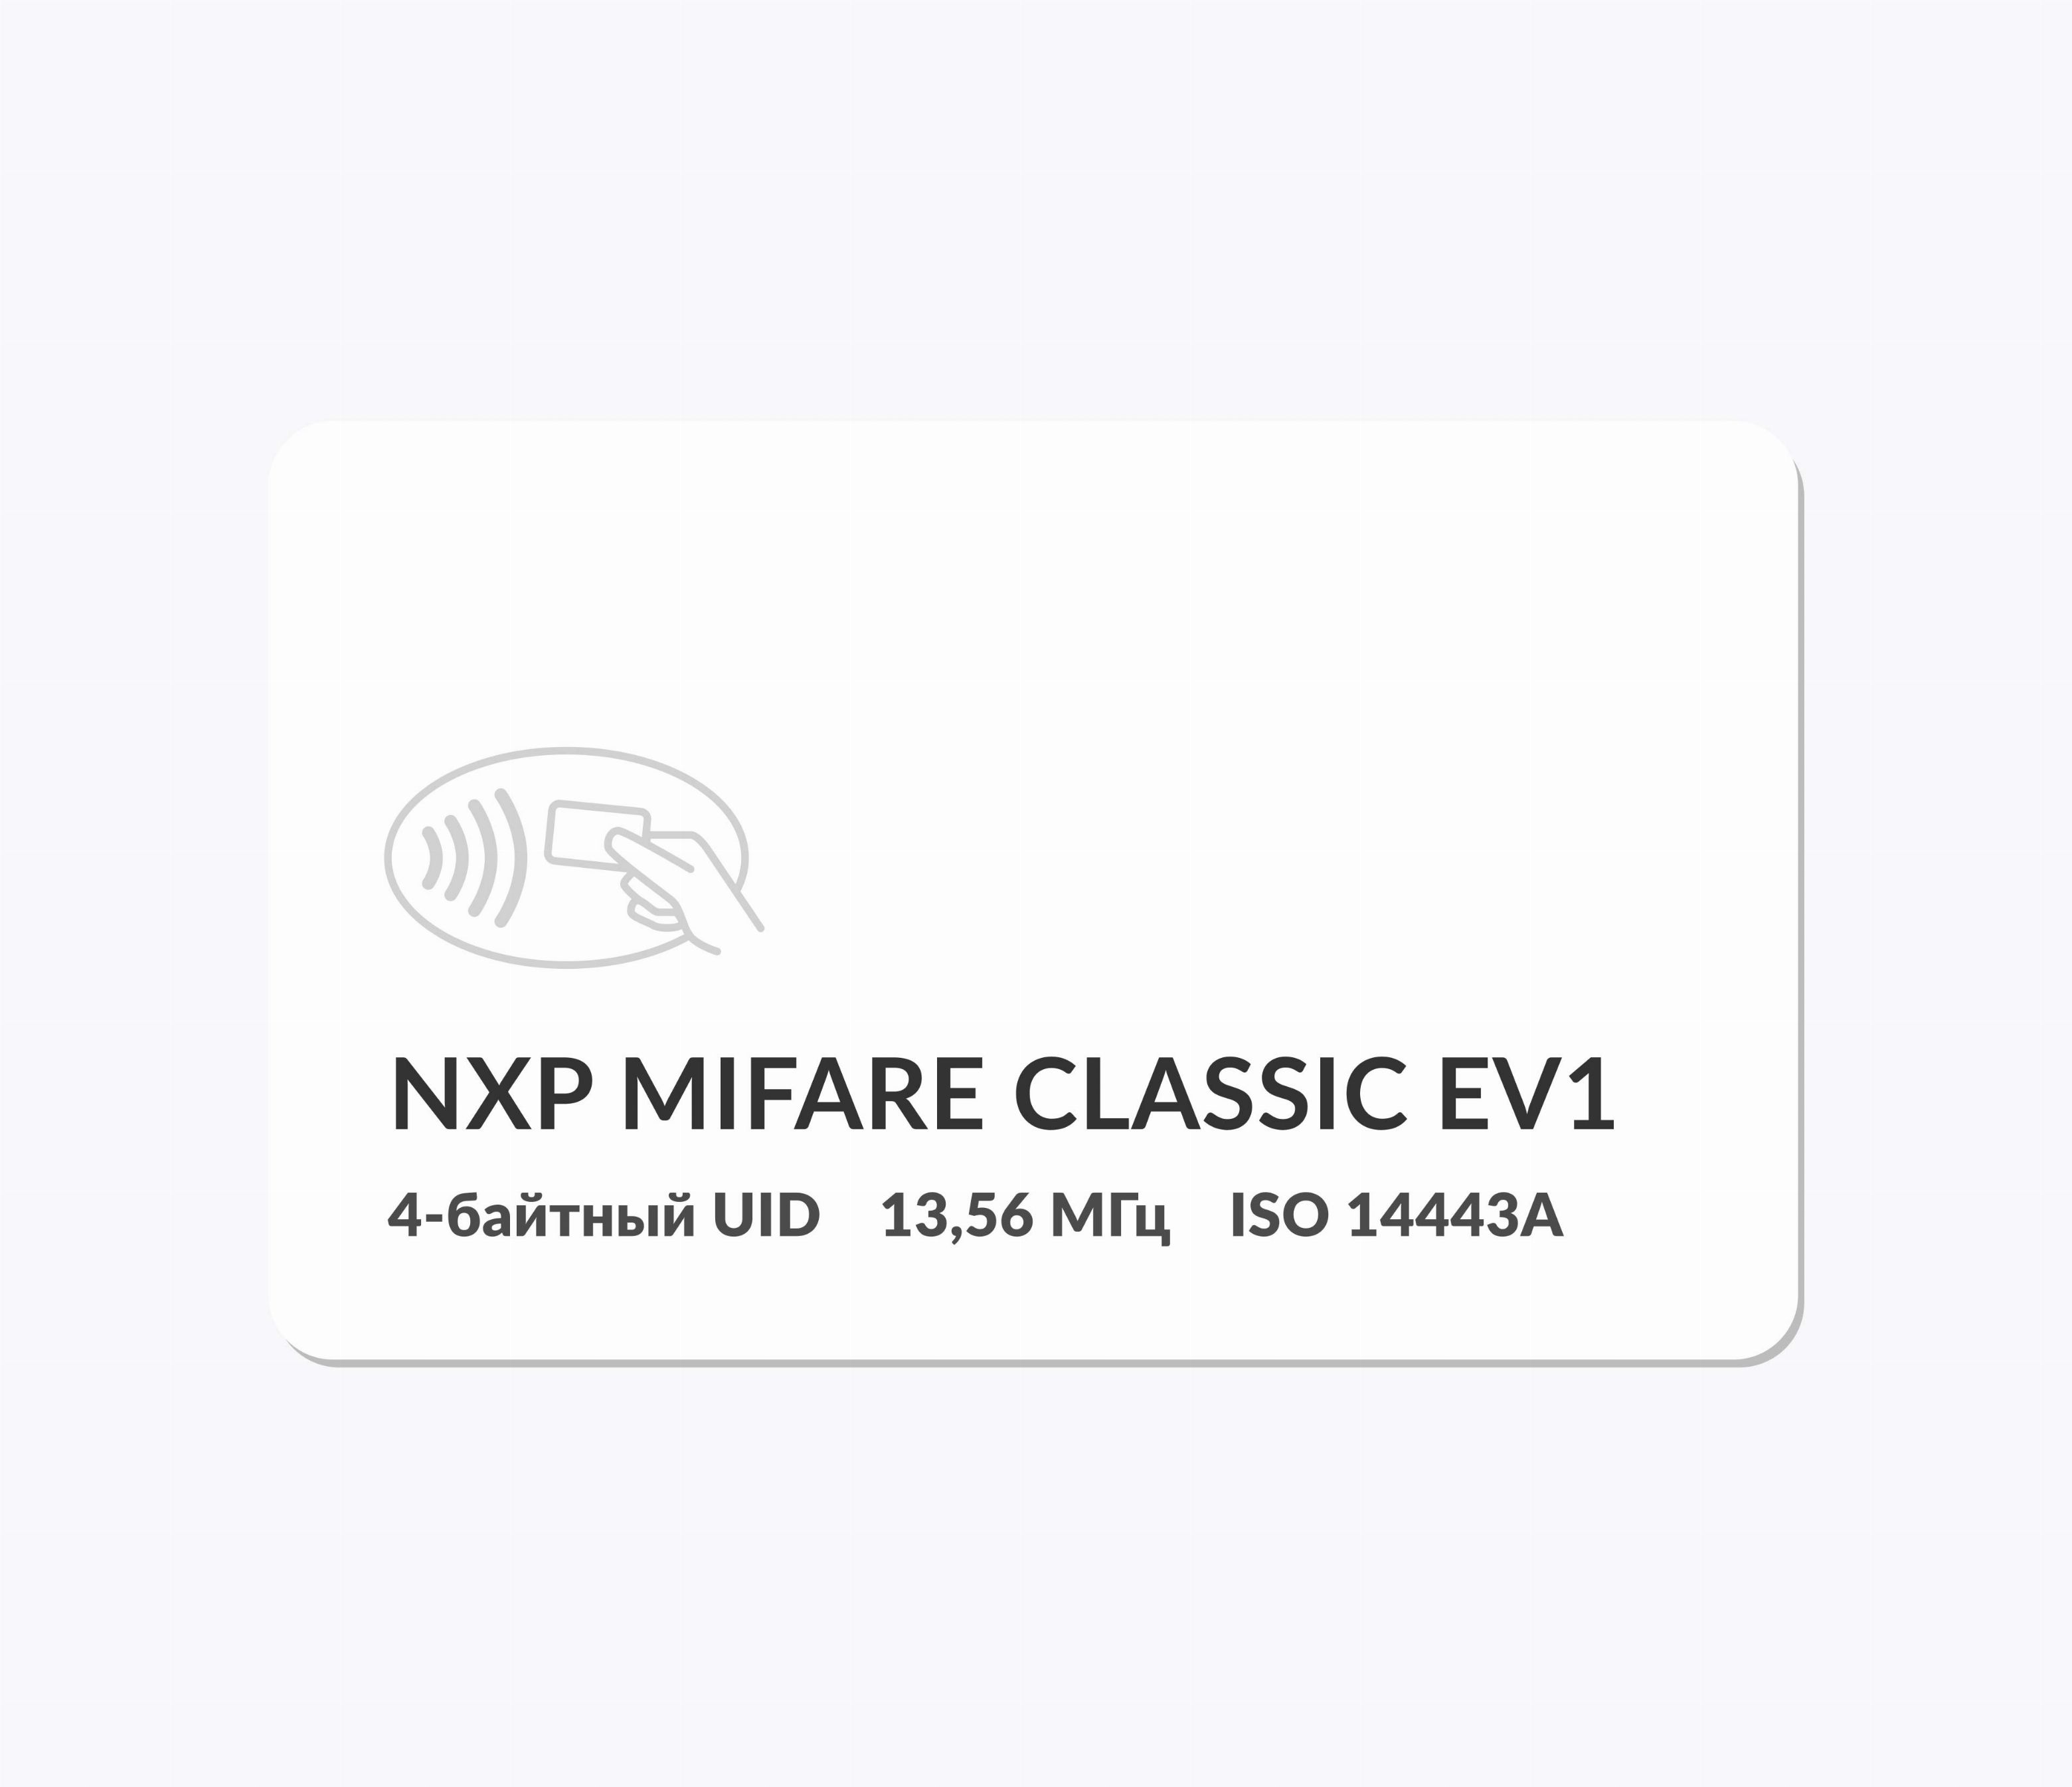 RFID-карты с чипом NXP MIFARE Classic EV1 1k 4 byte nUID RFID-карты с чипом NXP MIFARE Classic EV1 1k 4 byte nUID